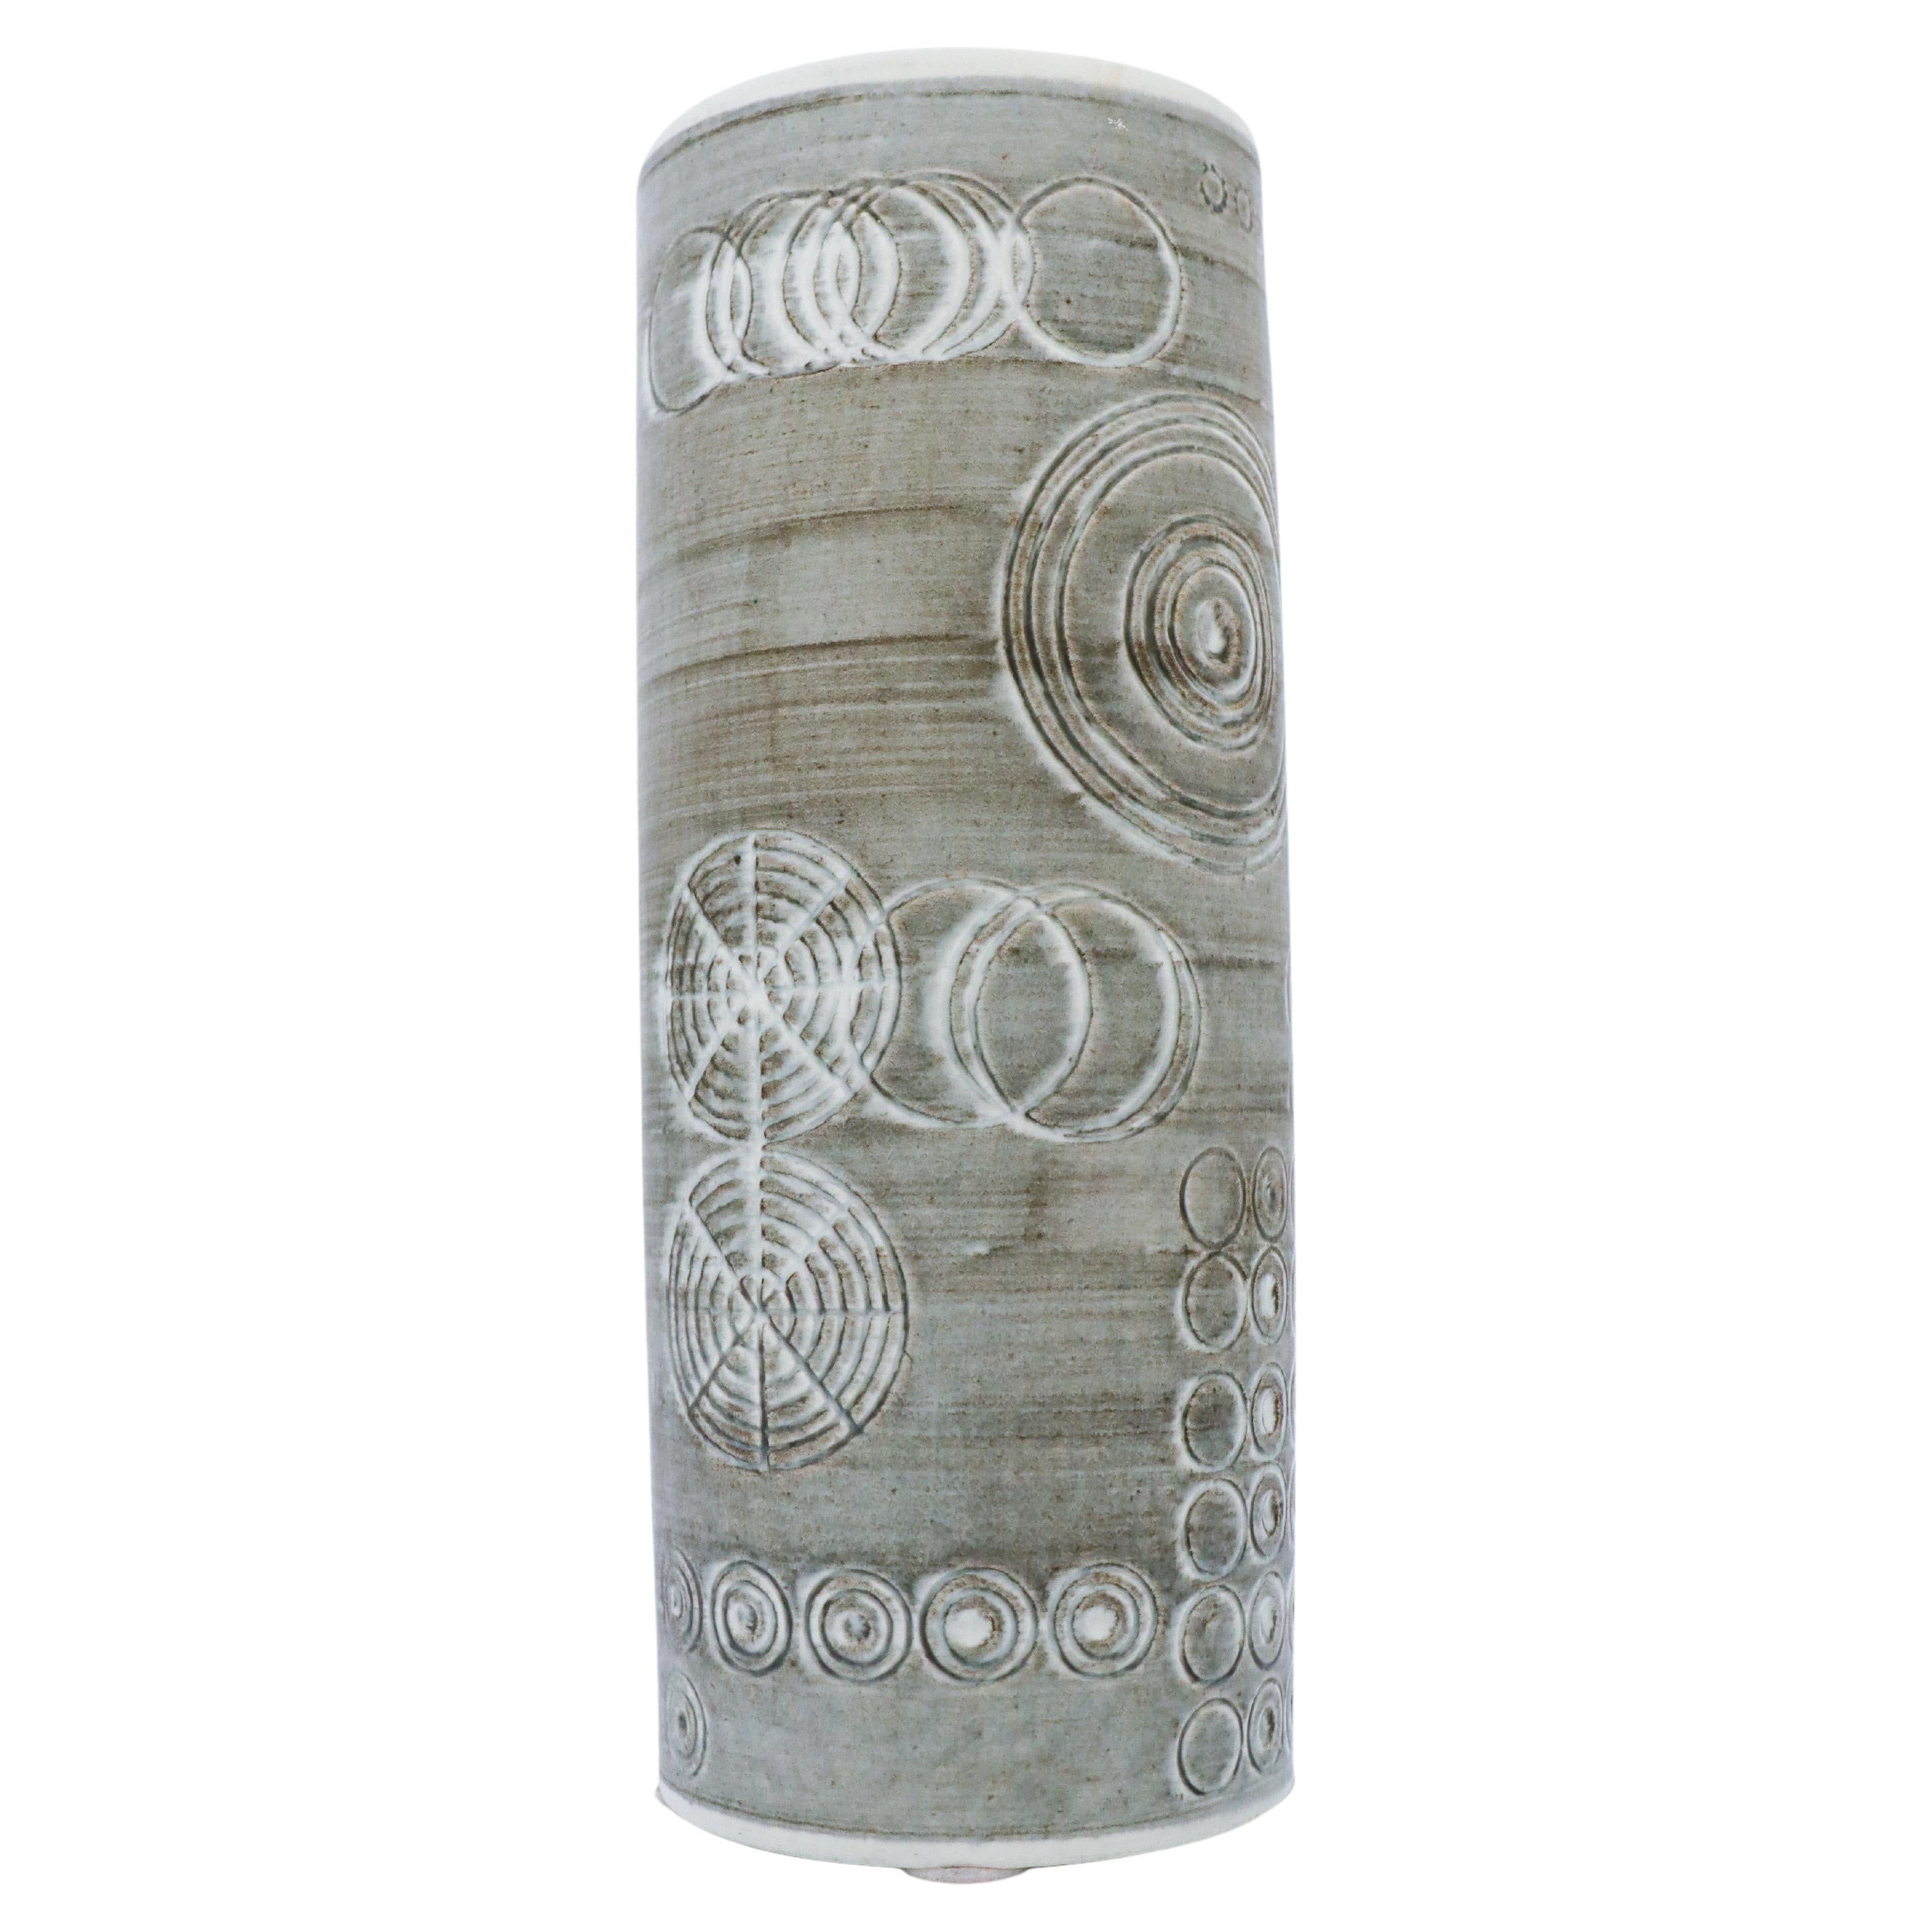 Graue runde Zylindrische Vase „Sarek“, Olle Alberius, Rrstrand, 1970er Jahre, Keramik